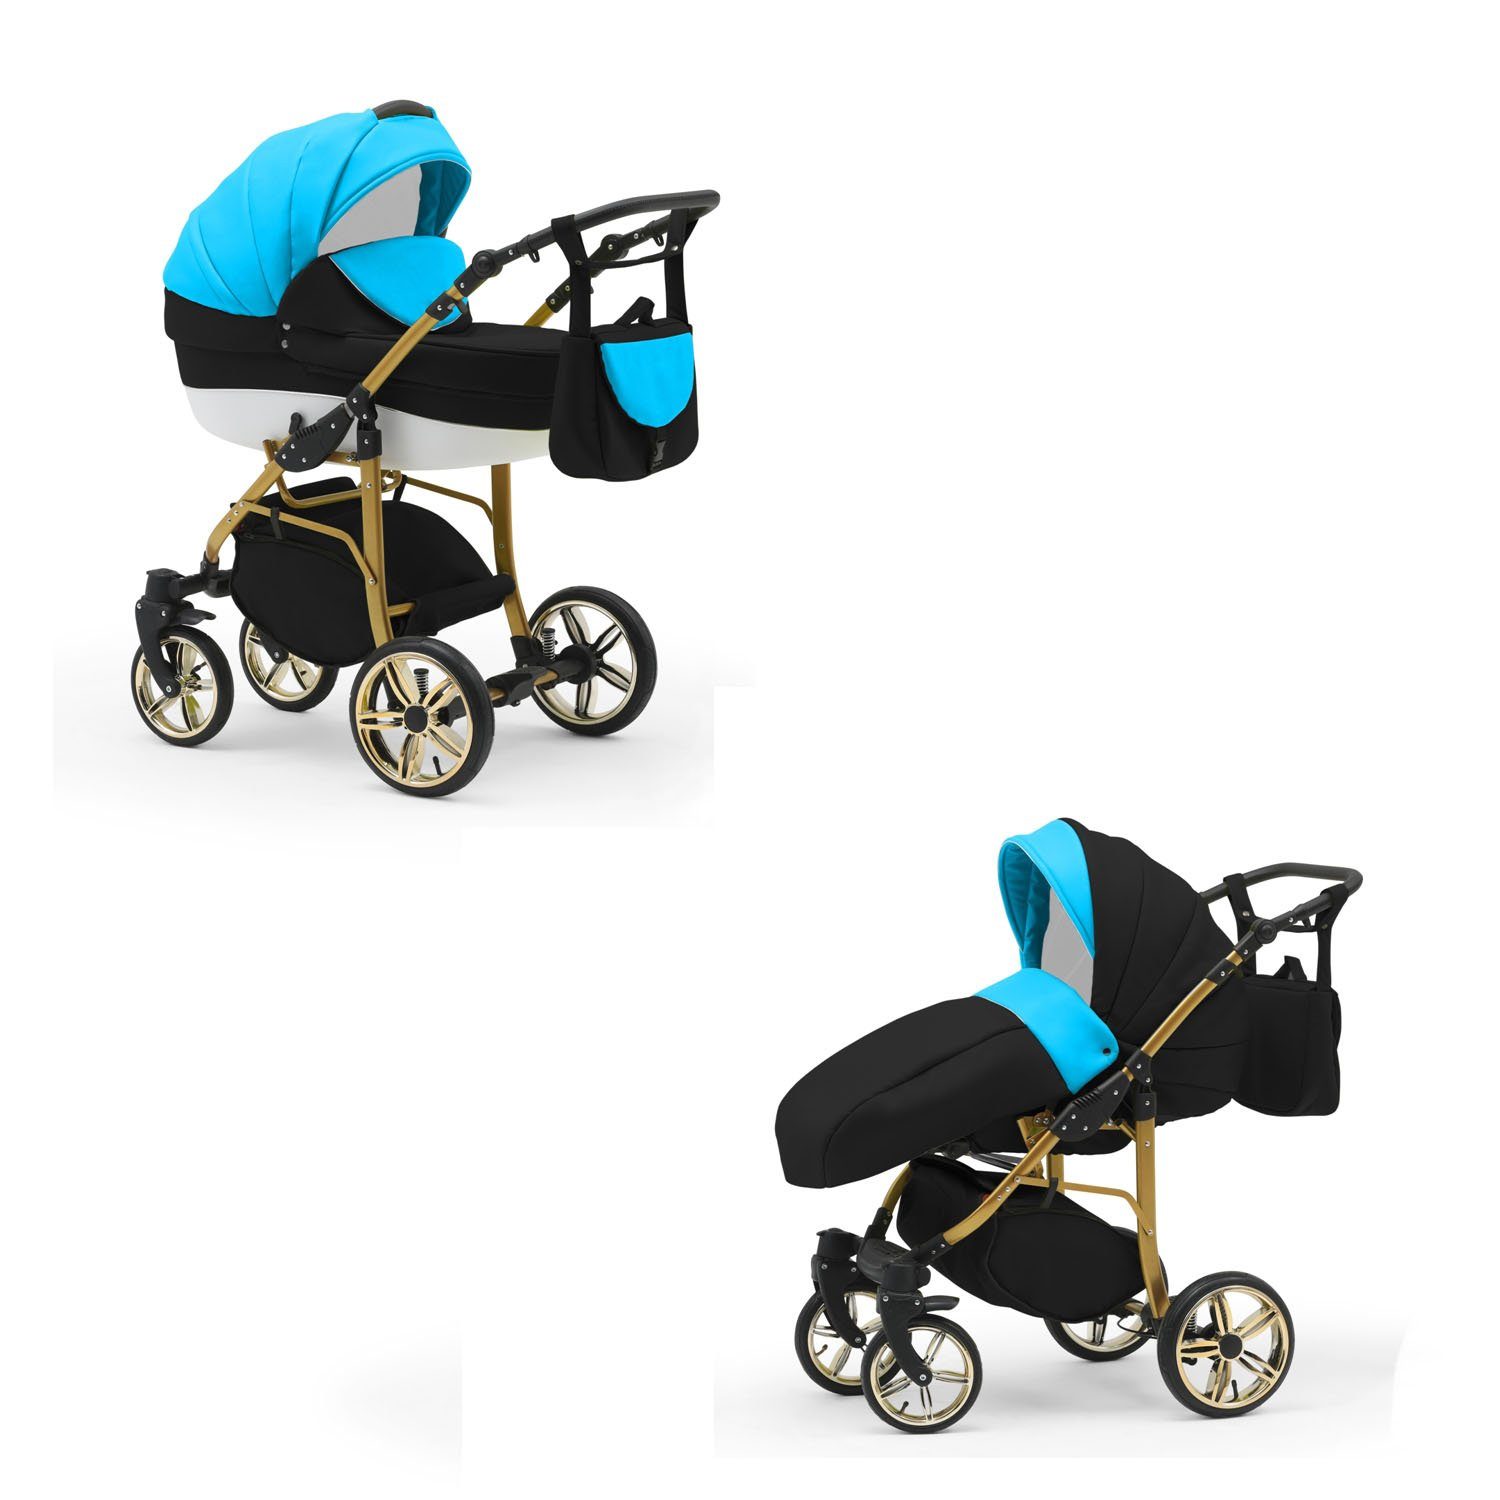 1 46 Farben 13 Cosmo - babies-on-wheels Kinderwagen-Set Türkis-Schwarz-Weiß 2 Gold Teile Kombi-Kinderwagen in - in